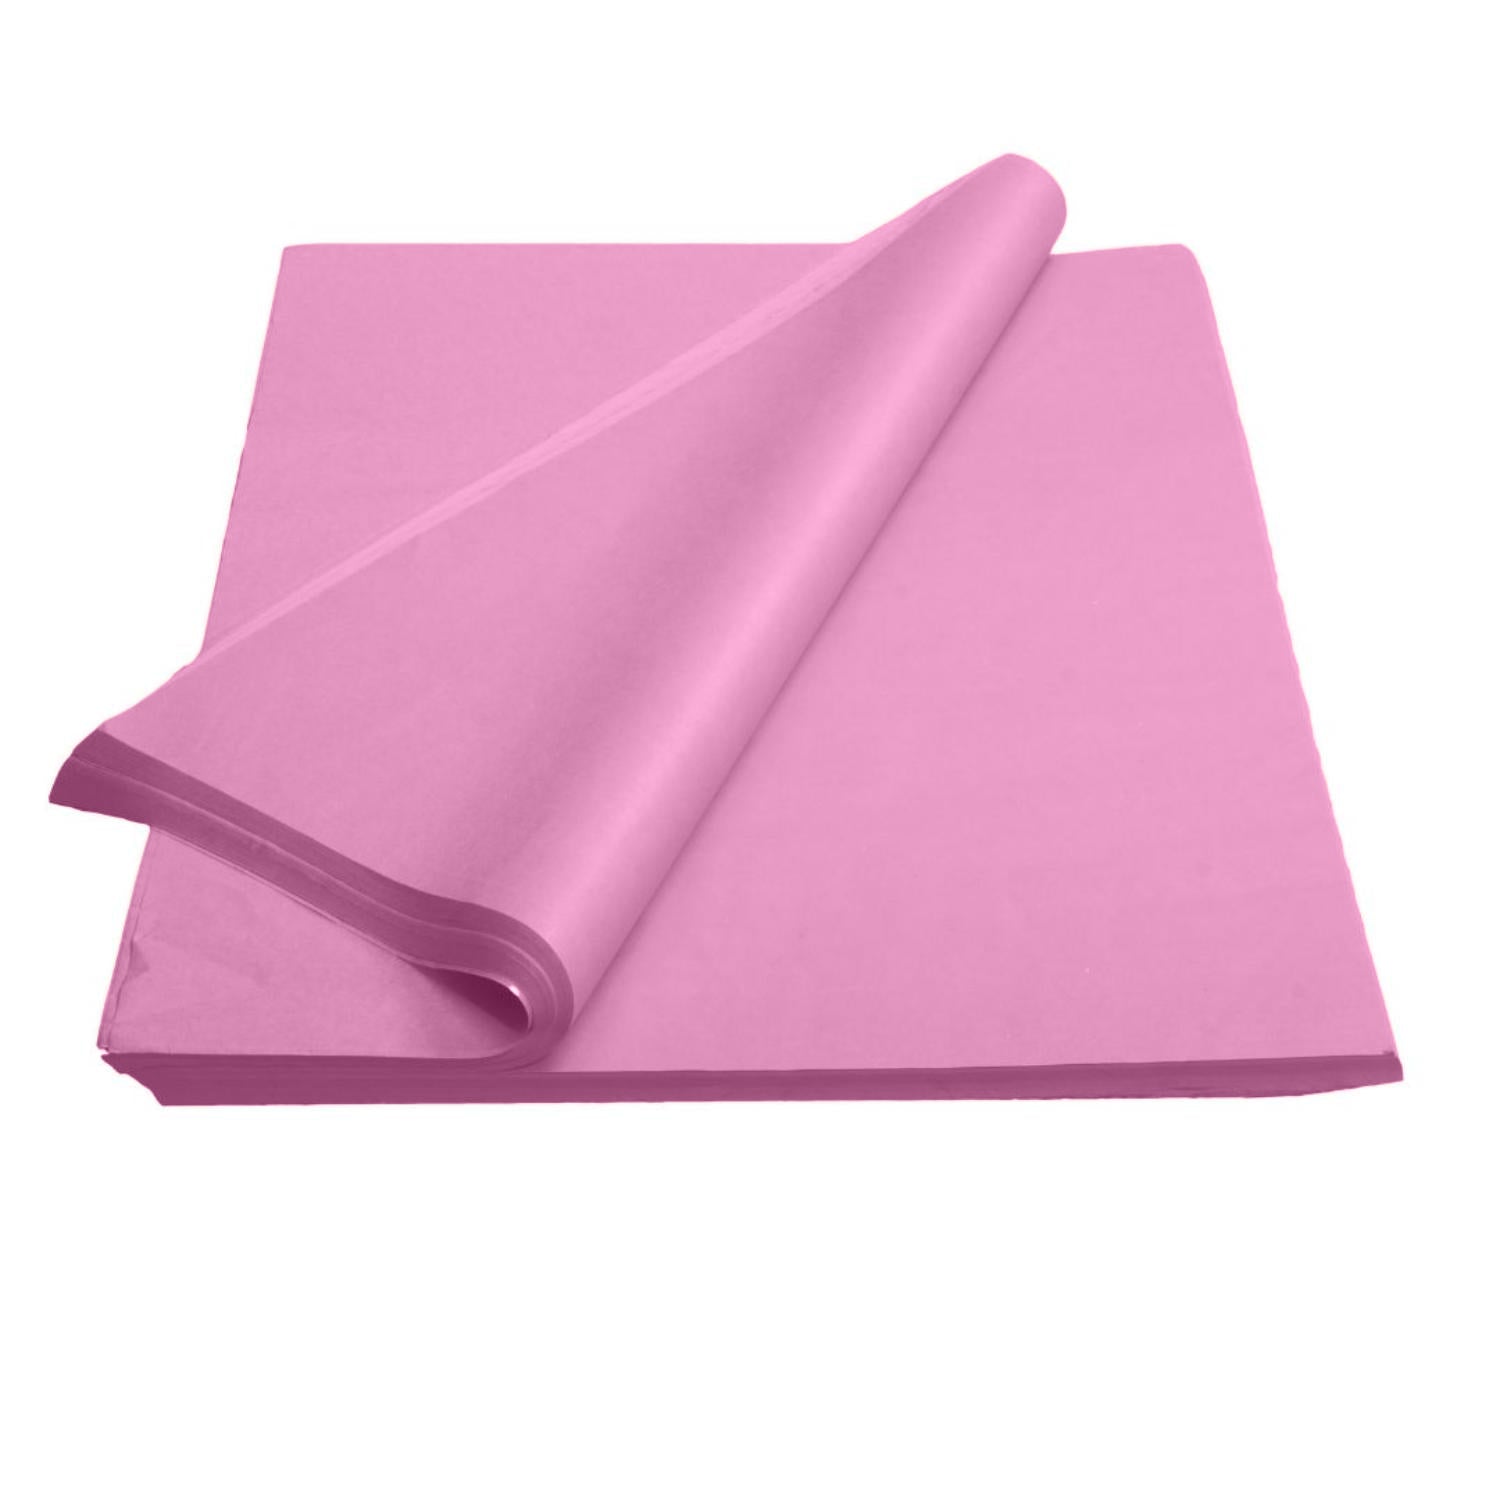 Blush Tissue Paper Sheets, Bulk Blush Pink Tissue Paper, Nude